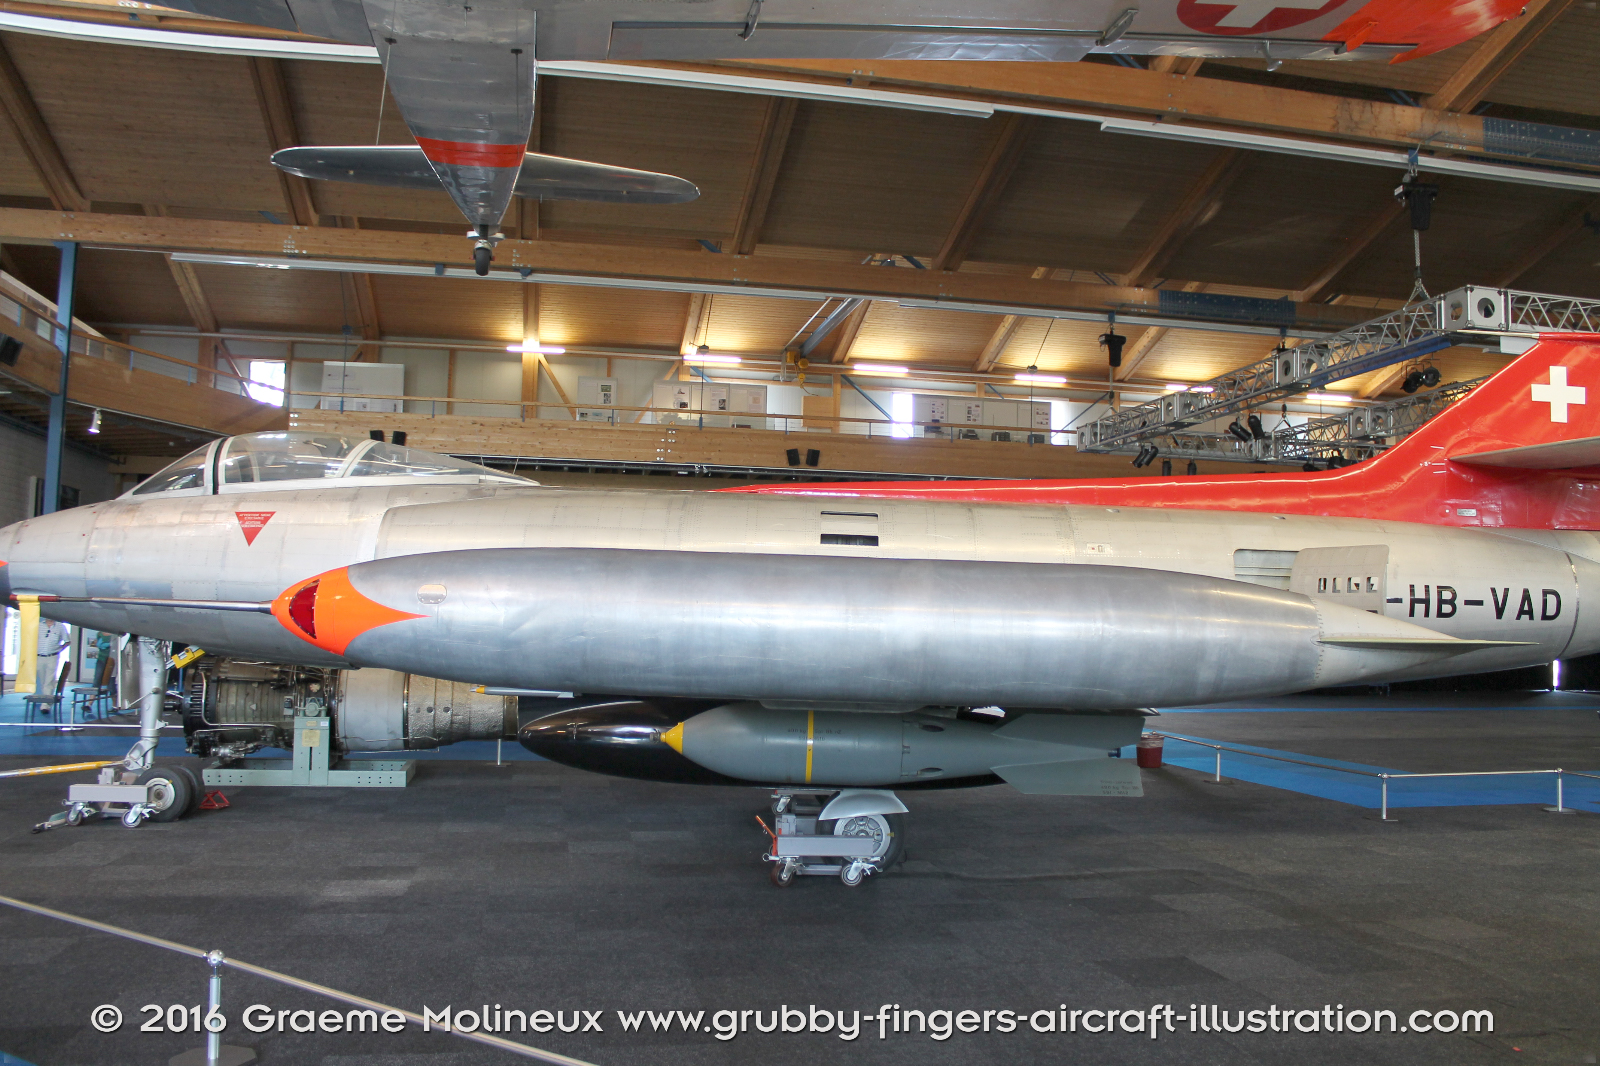 FFA_P-16_X-HB-VAD_Swiss_Air_Force_Museum_2015_55_GrubbyFingers